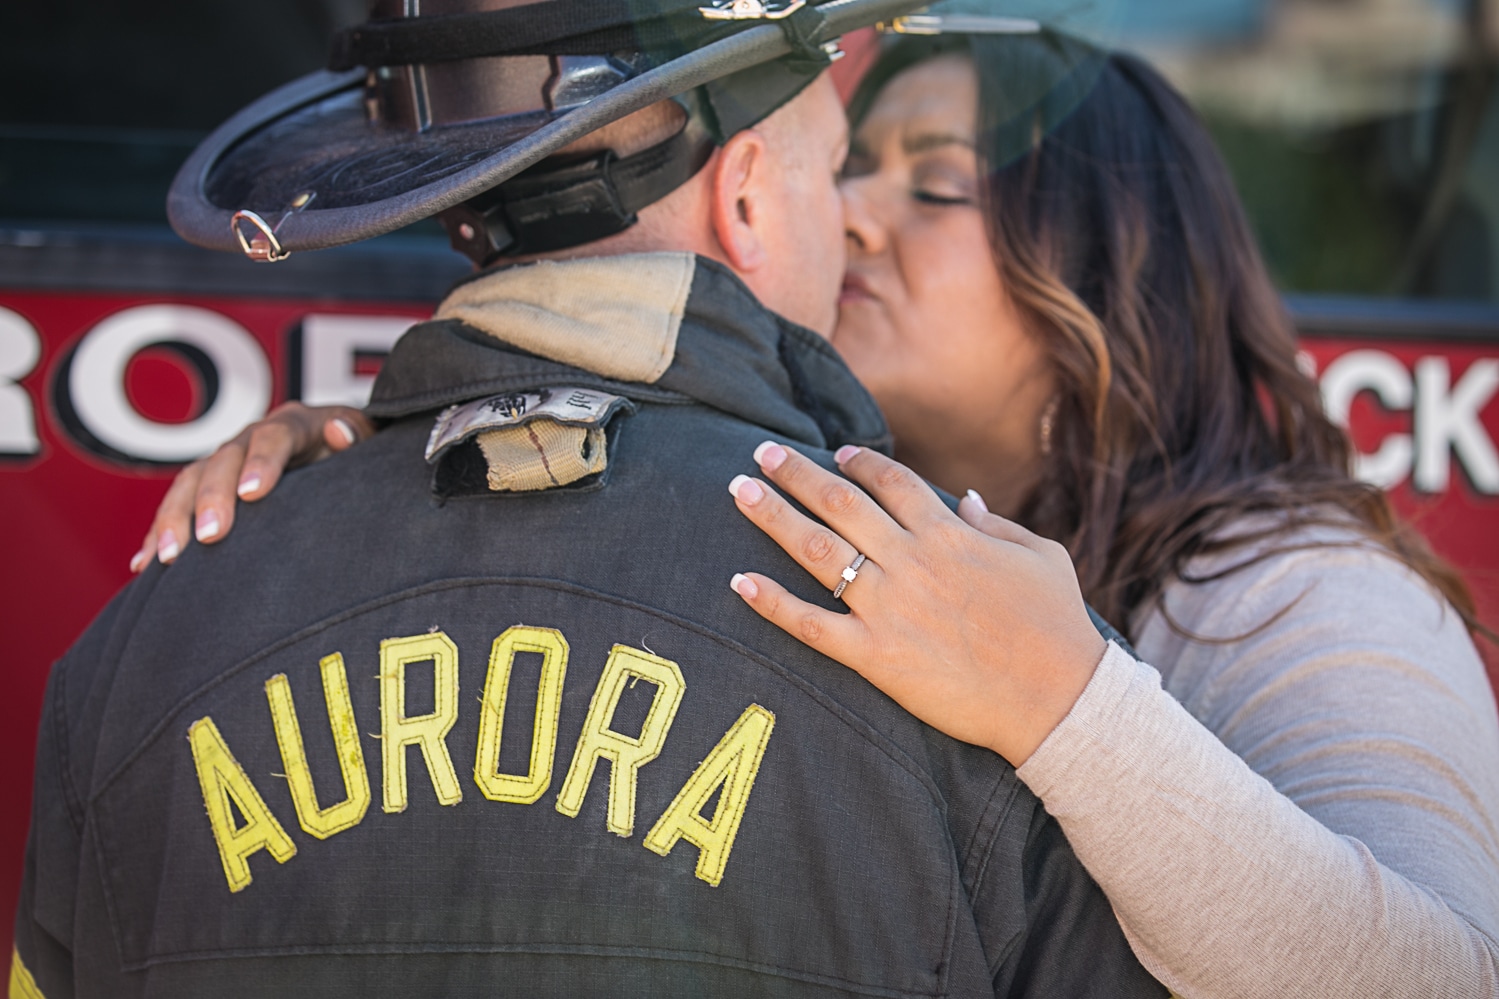 Aurora Illinois Engagement Session featuring firetrucks and fireman